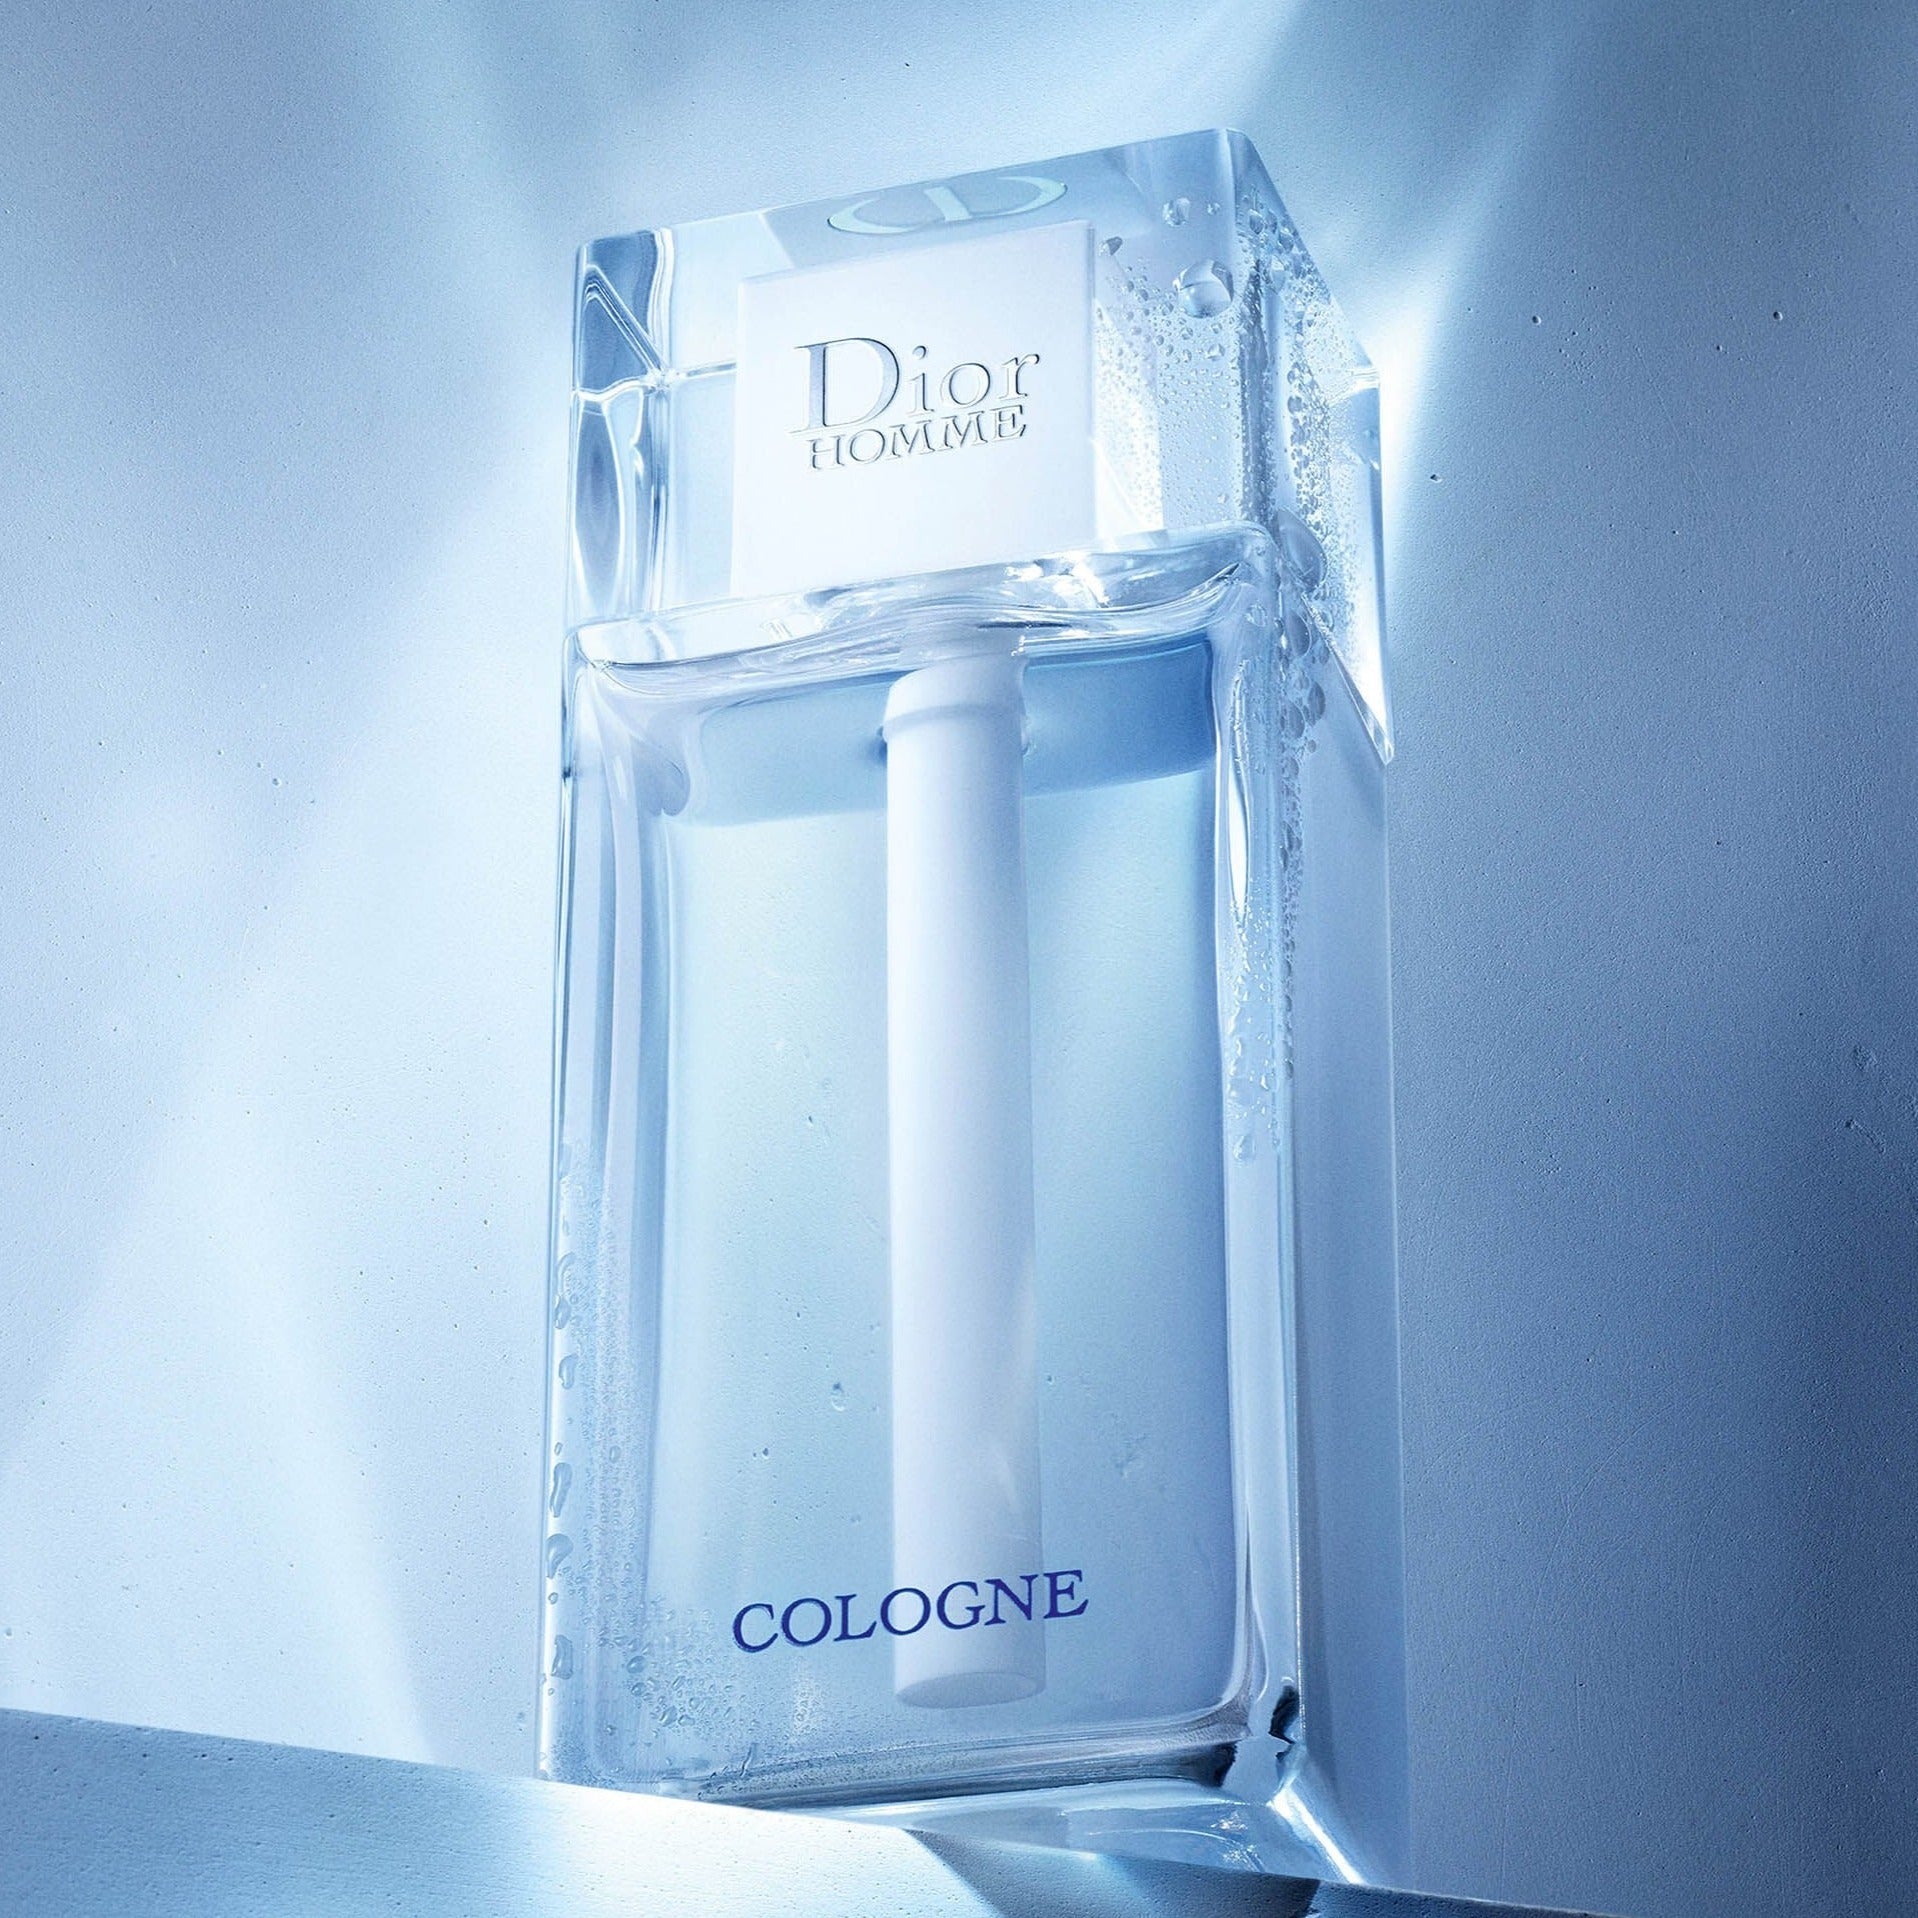 Dior Homme Cologne EDC | My Perfume Shop Australia